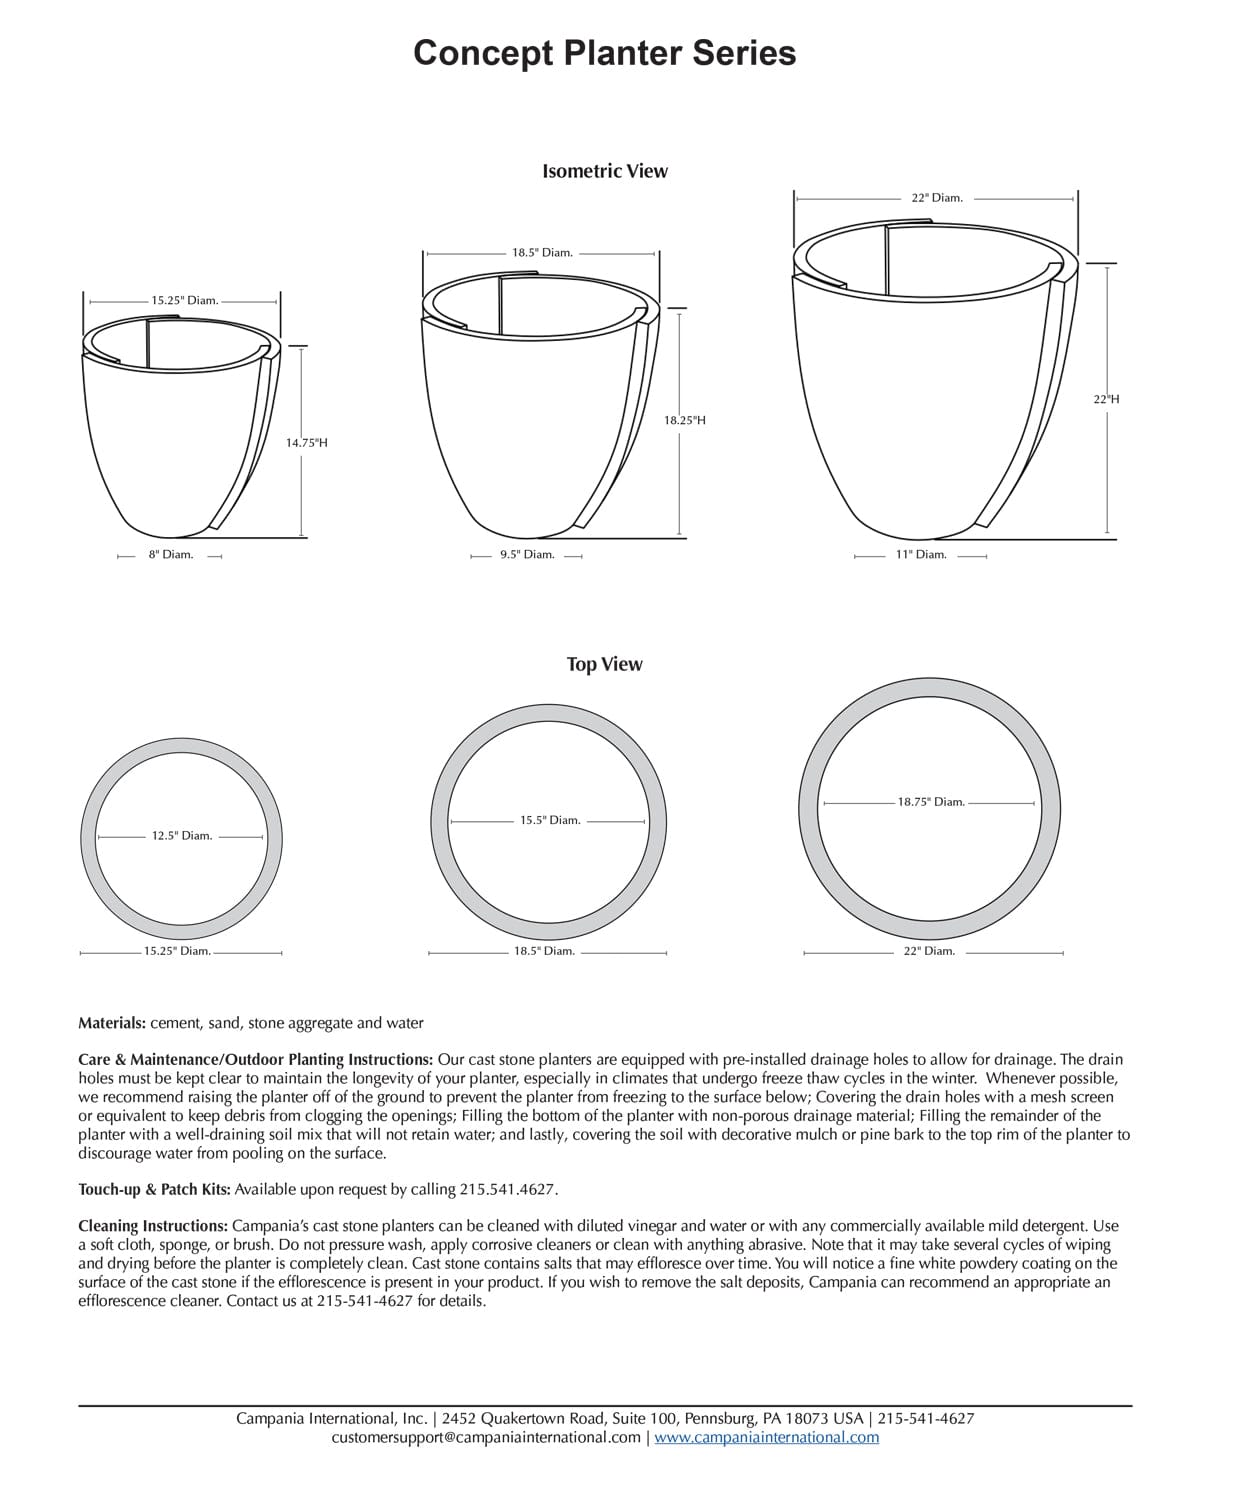 Concept Modern Planter Series Specs